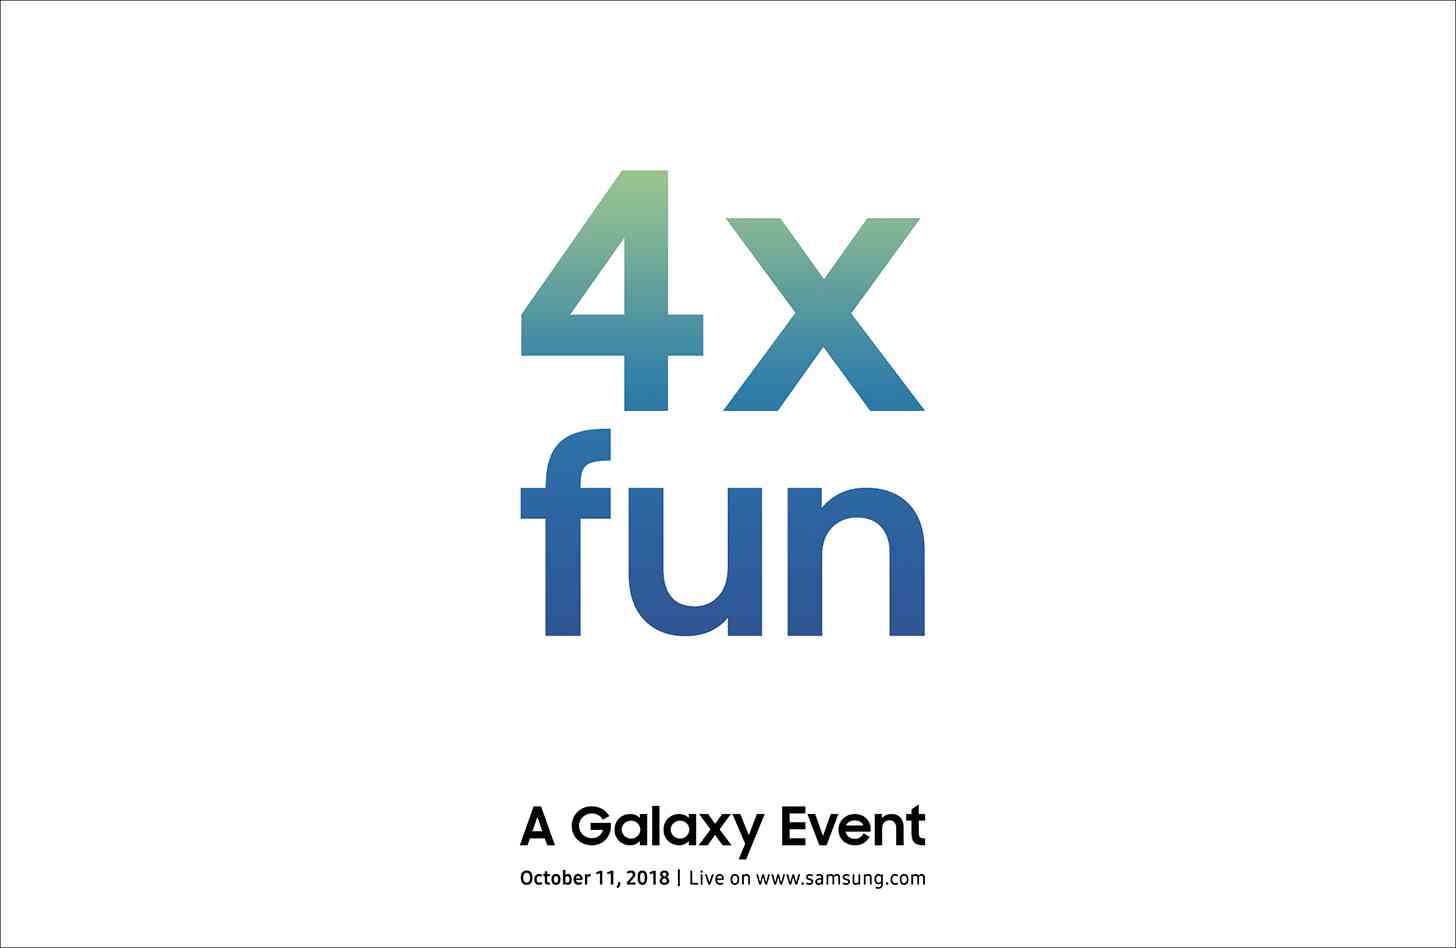 Samsung 4x fun Galaxy event invitation